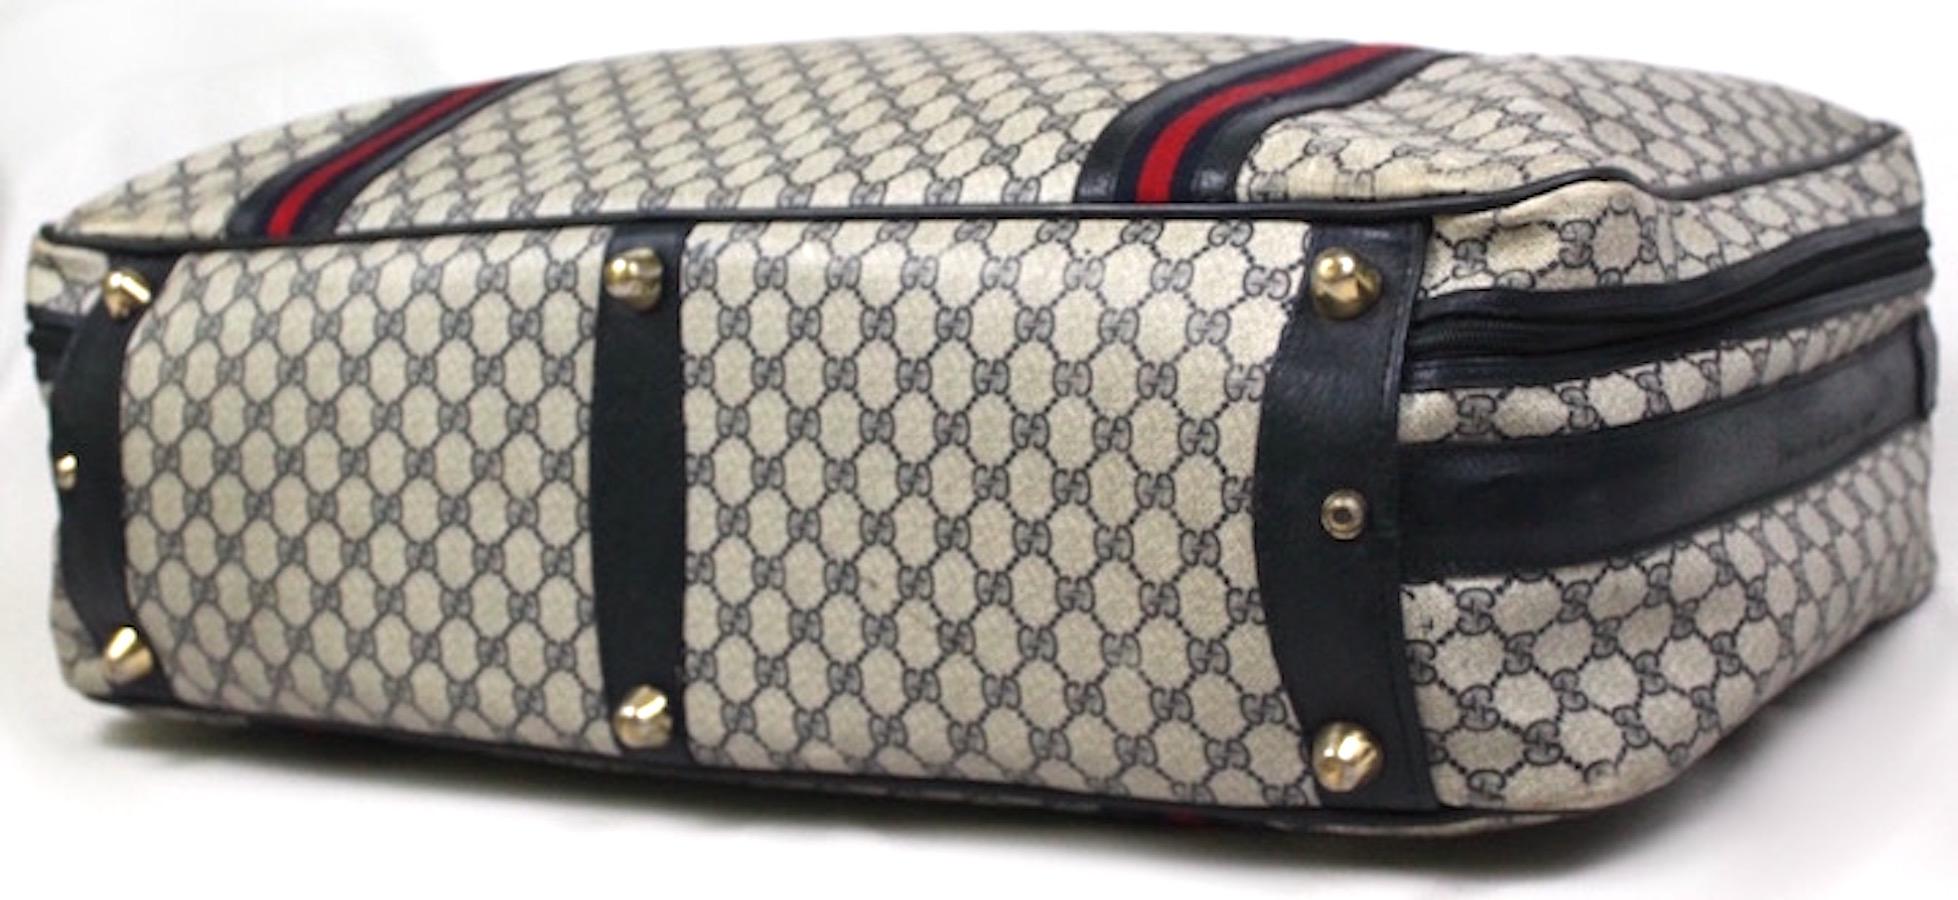 Gucci Guccissima Canvas & Leather Luggage Suitcase, c. 1980's, 16